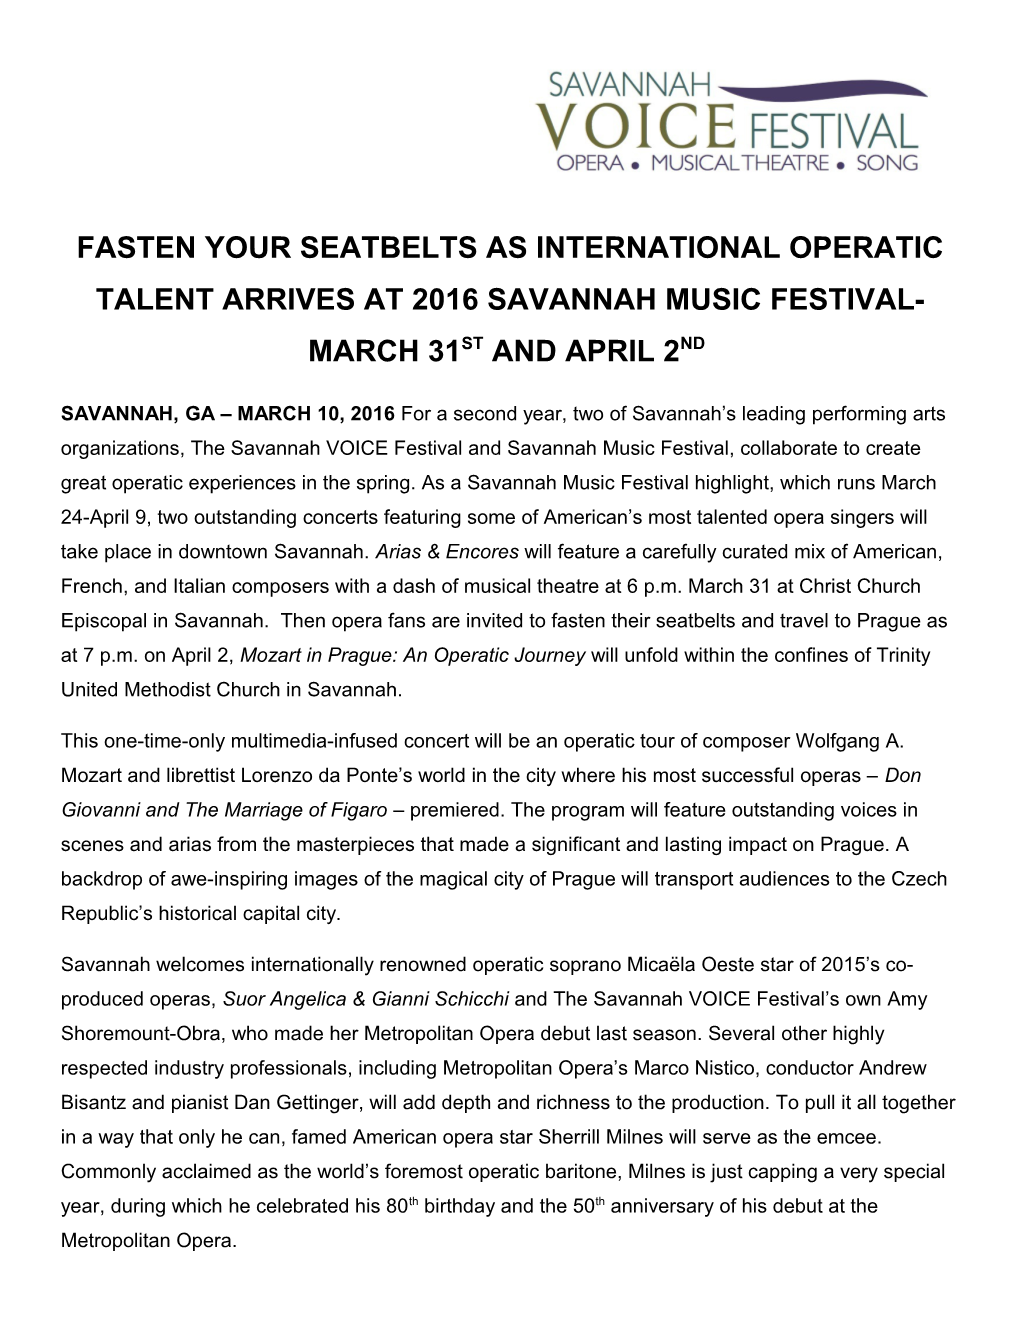 Fasten Your Seatbelts As International Operatic Talent Arrives at 2016 Savannah Music